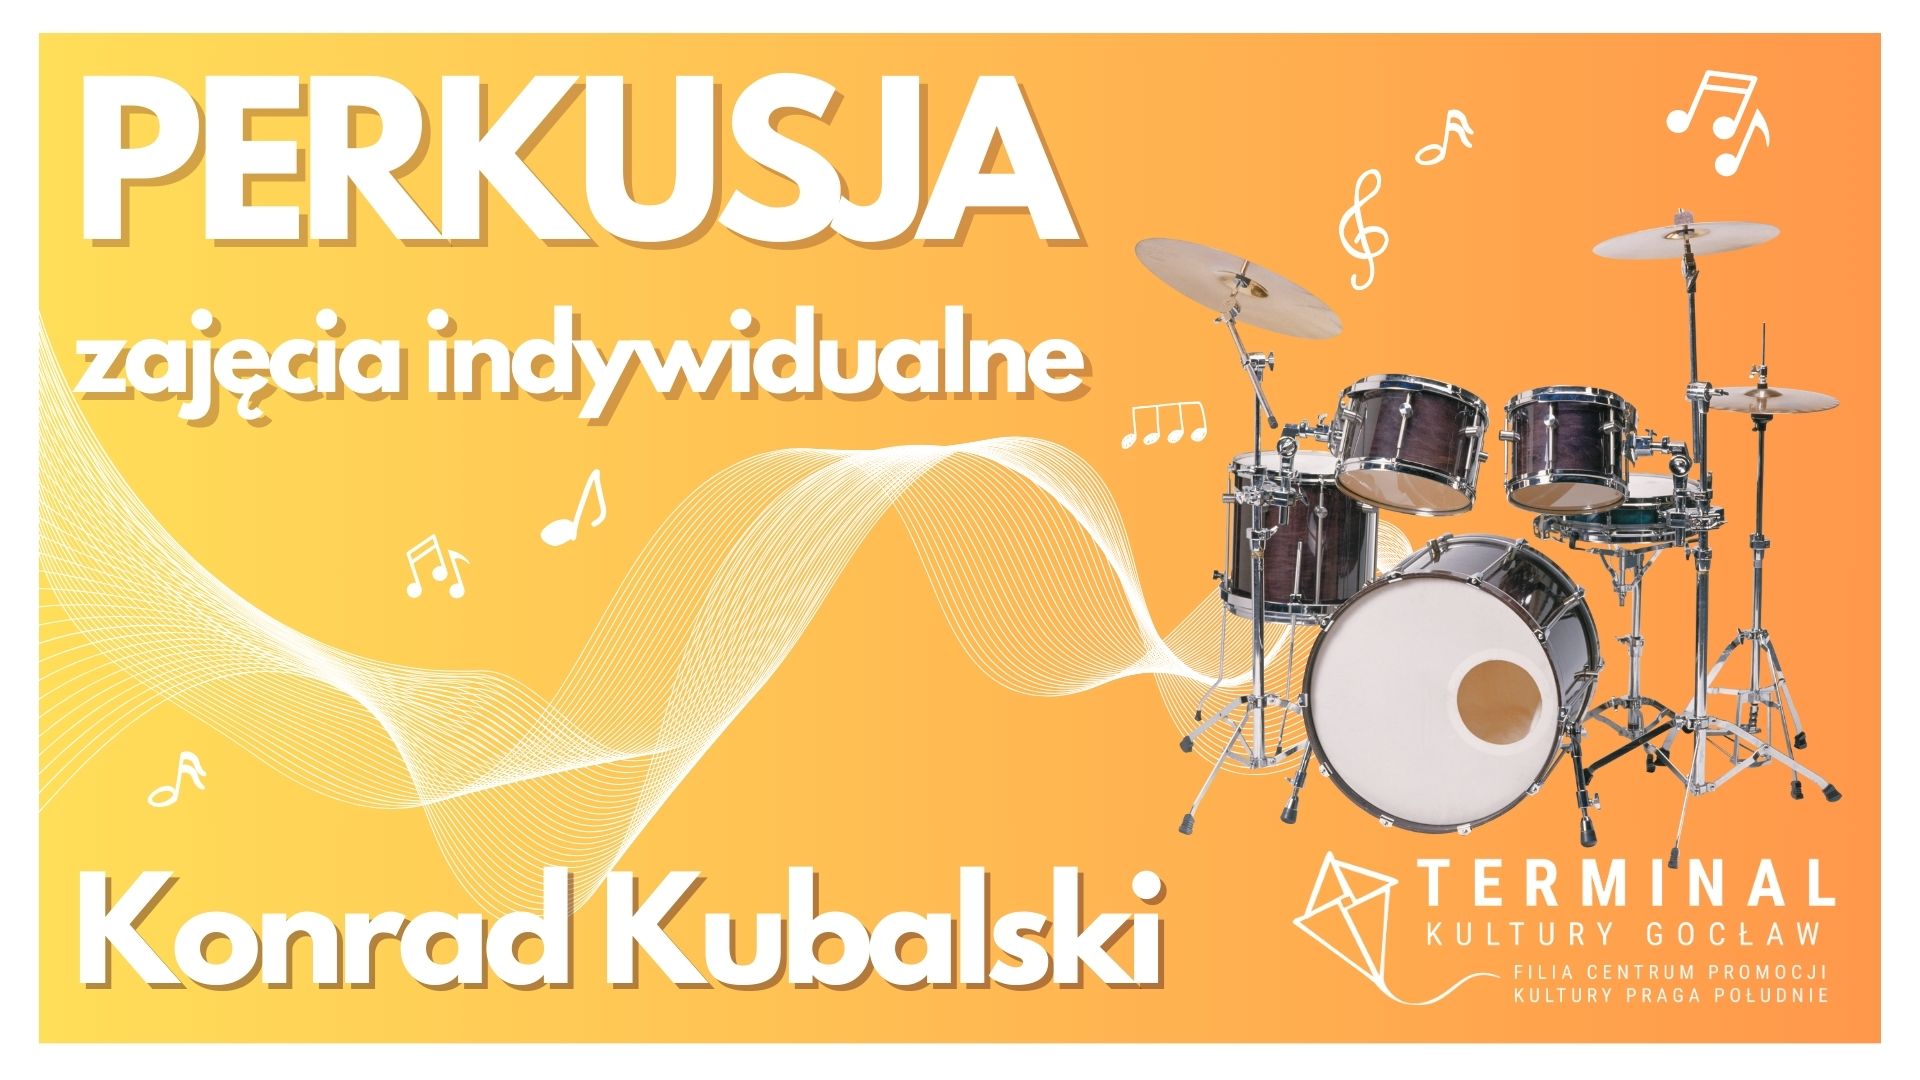 Perkusja - zajęcia indywidualne Konrad Kubalski